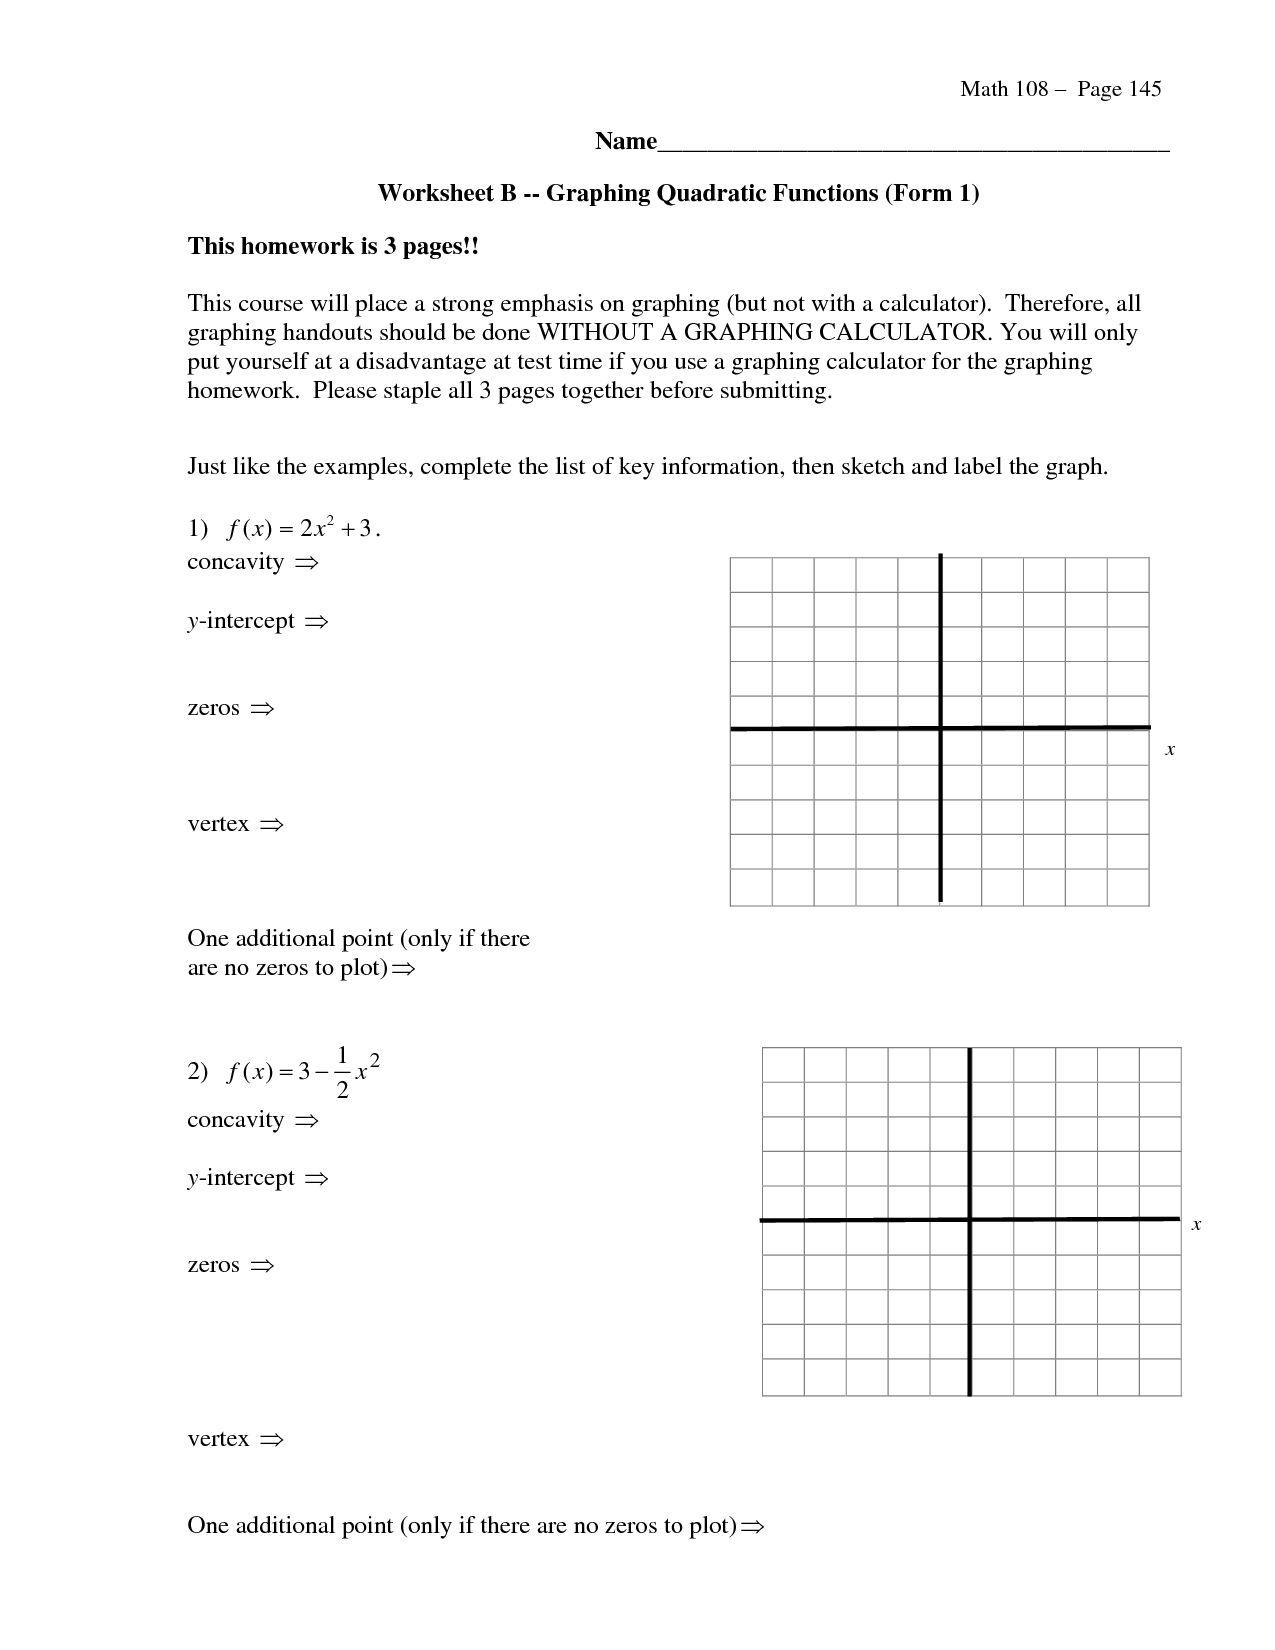 Graphing Parabolas In Vertex Form Worksheet Db excel